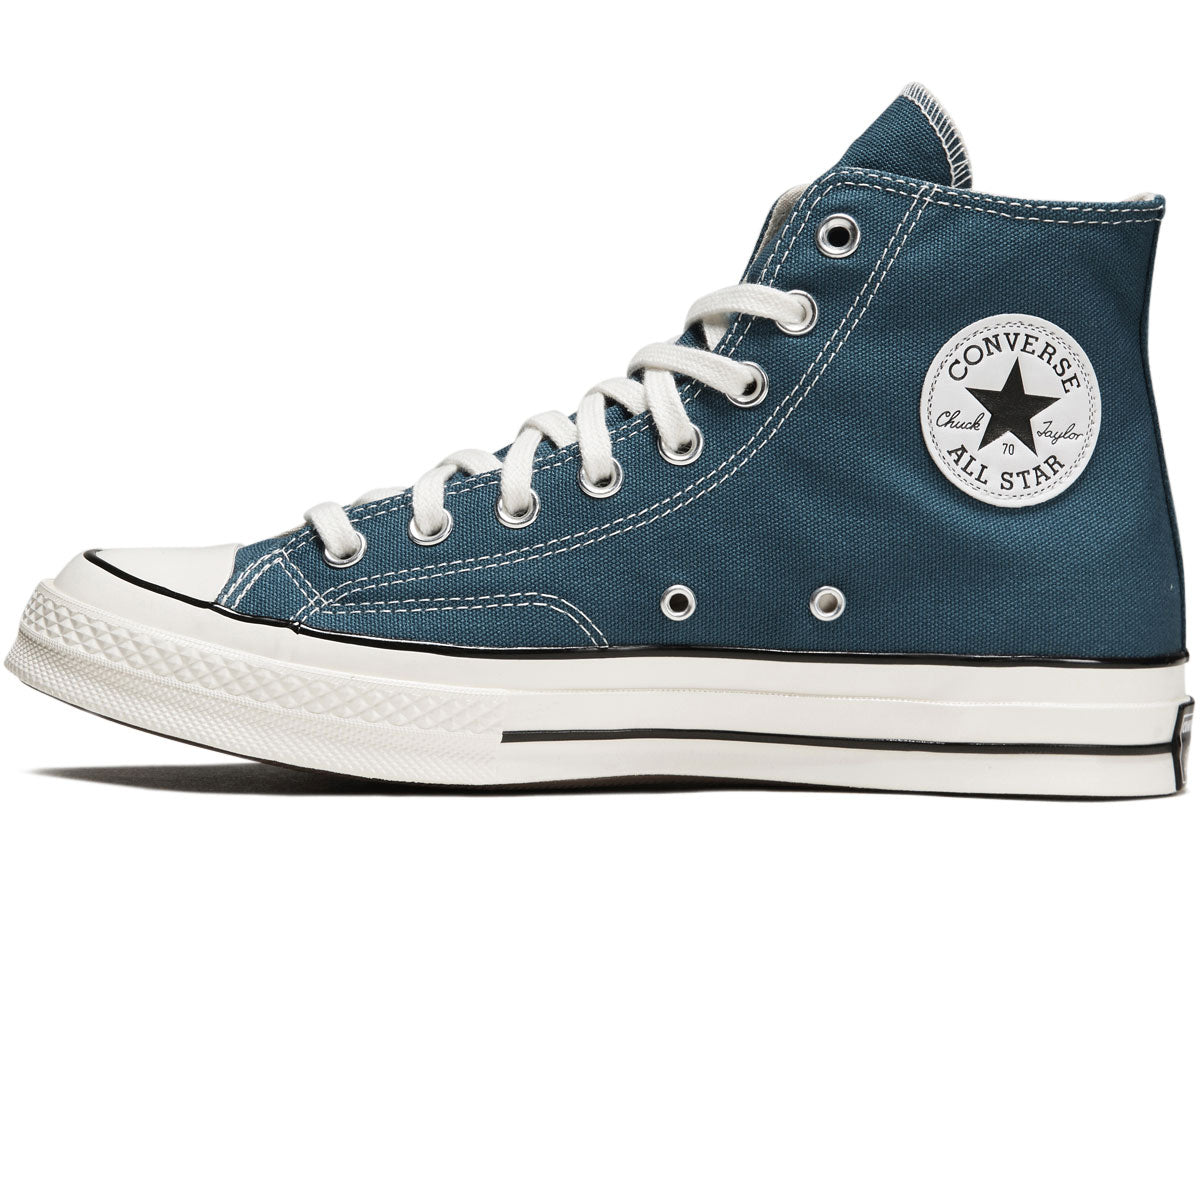 Converse Chuck 70 Hi Shoes - Teal Universe/Egret/Black image 2